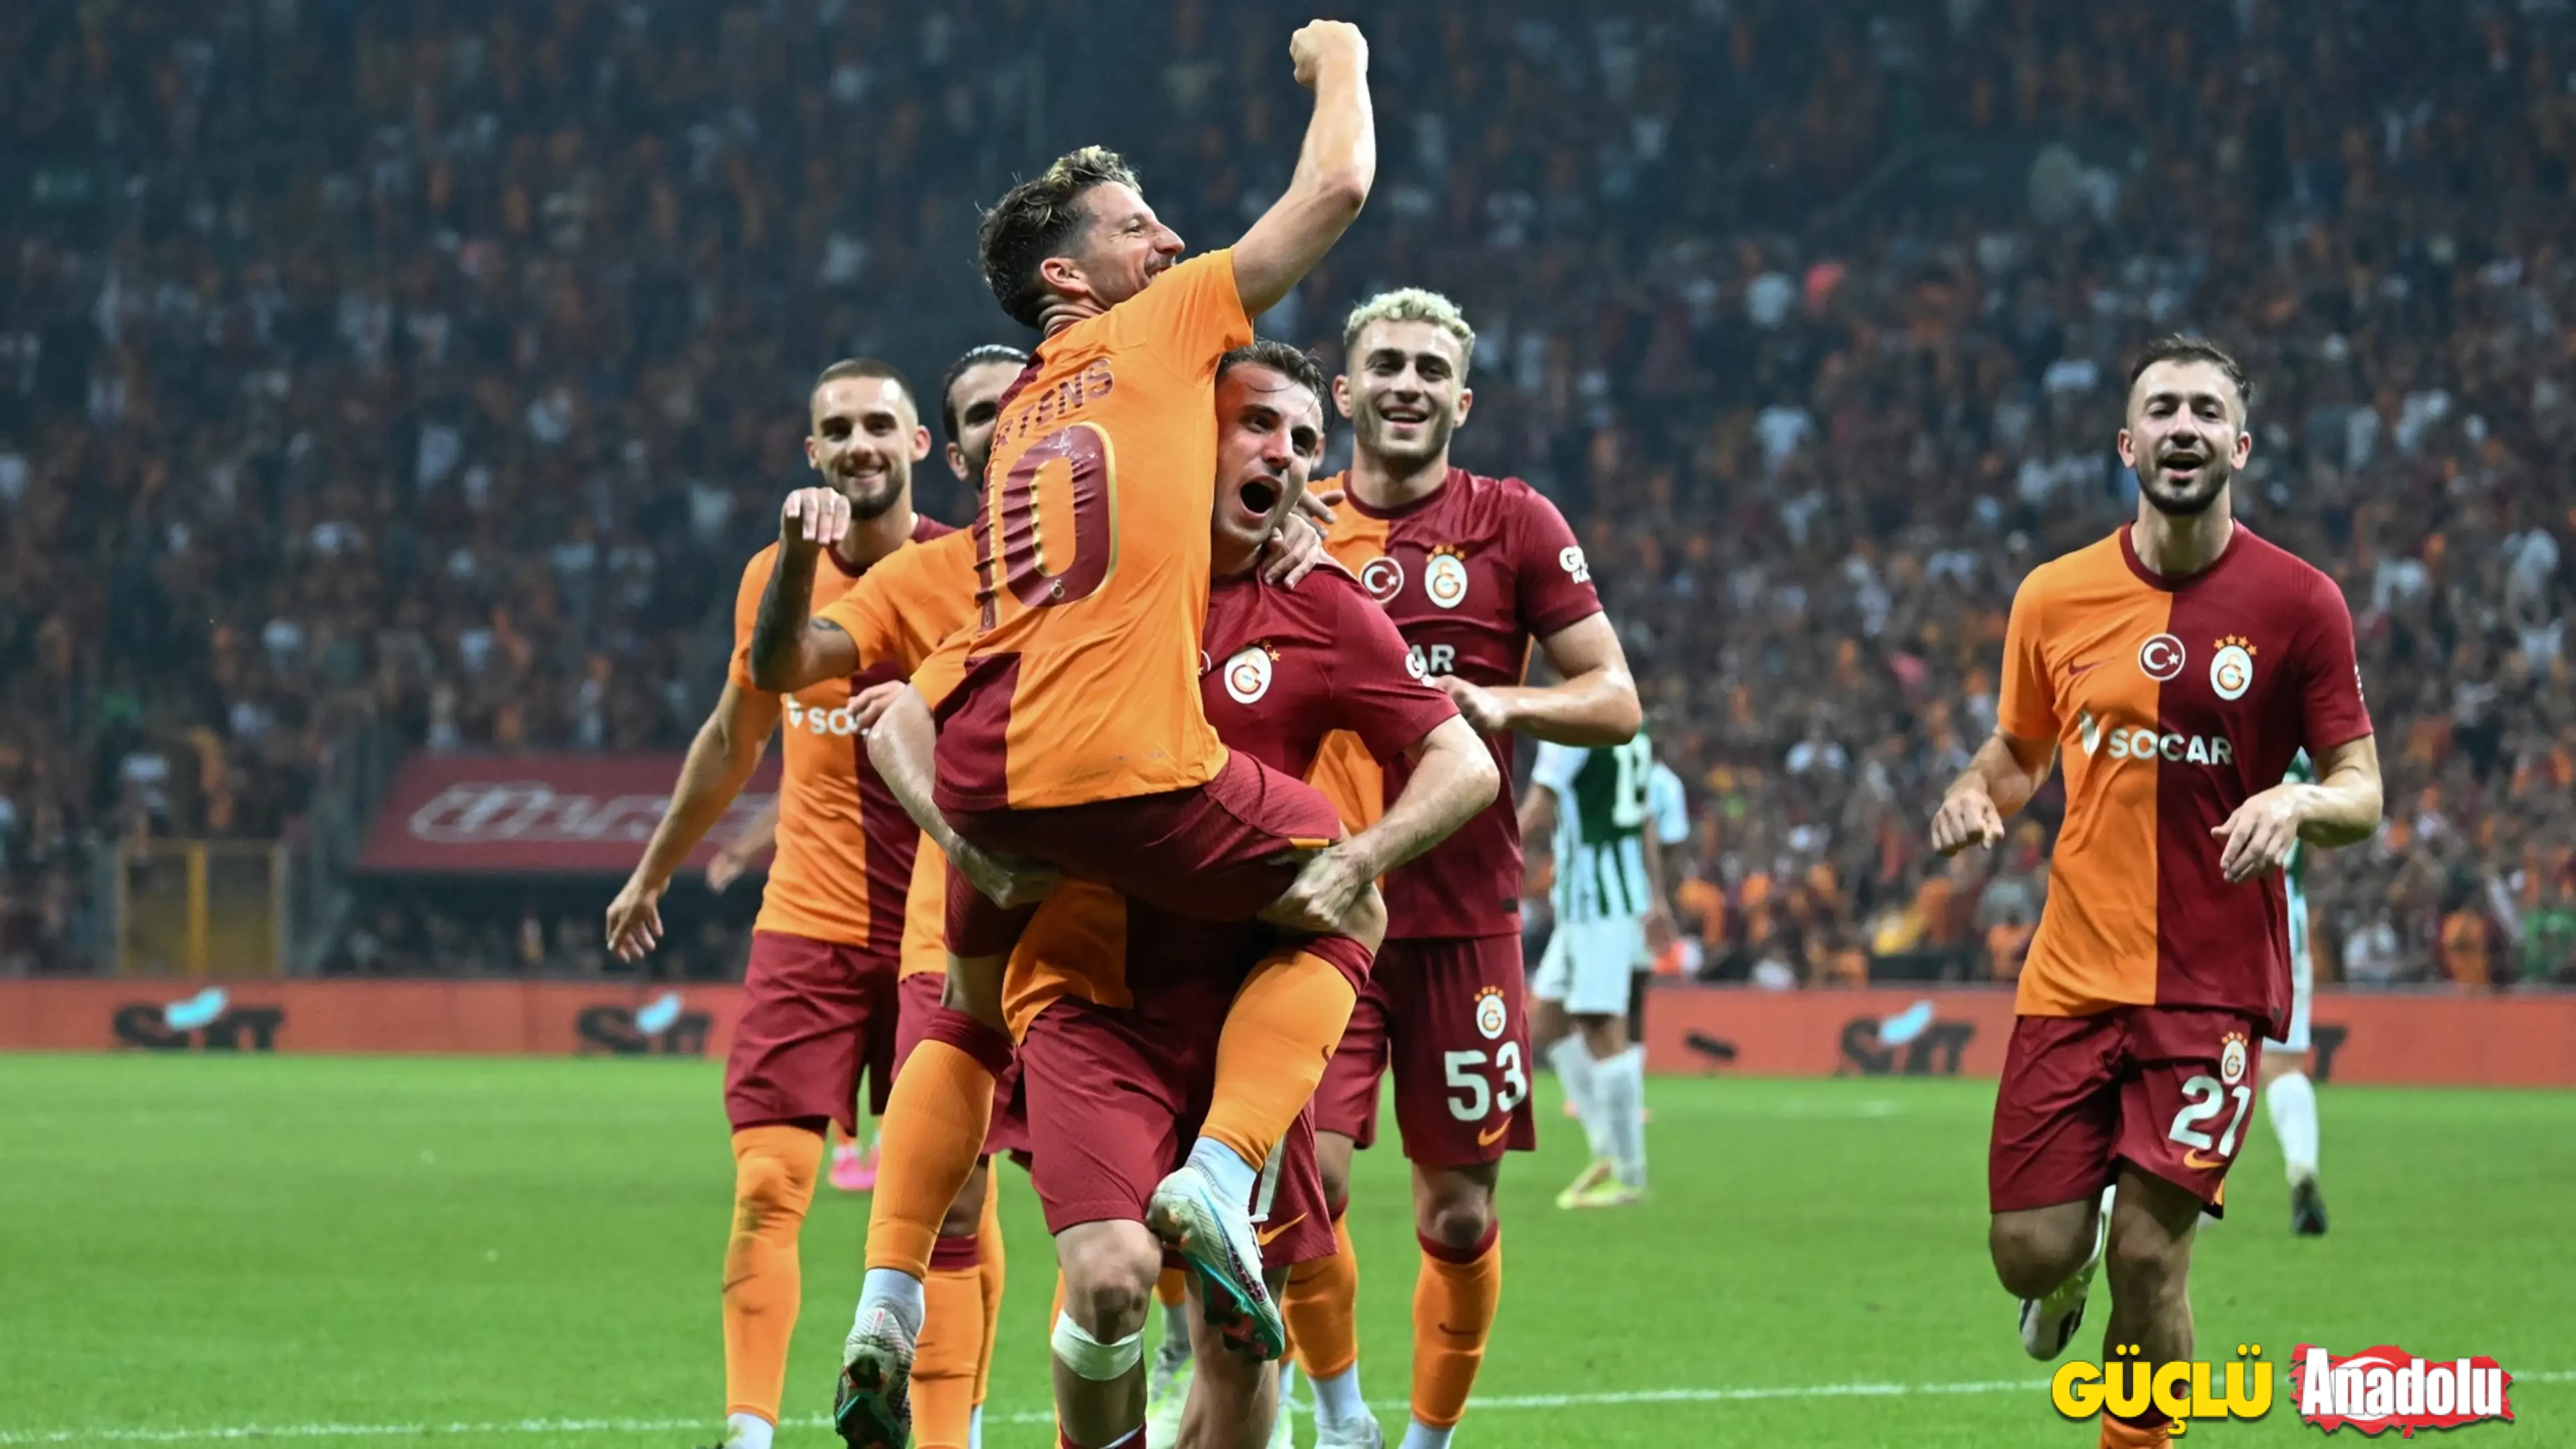 Galatasaray_vs_Zalgiris